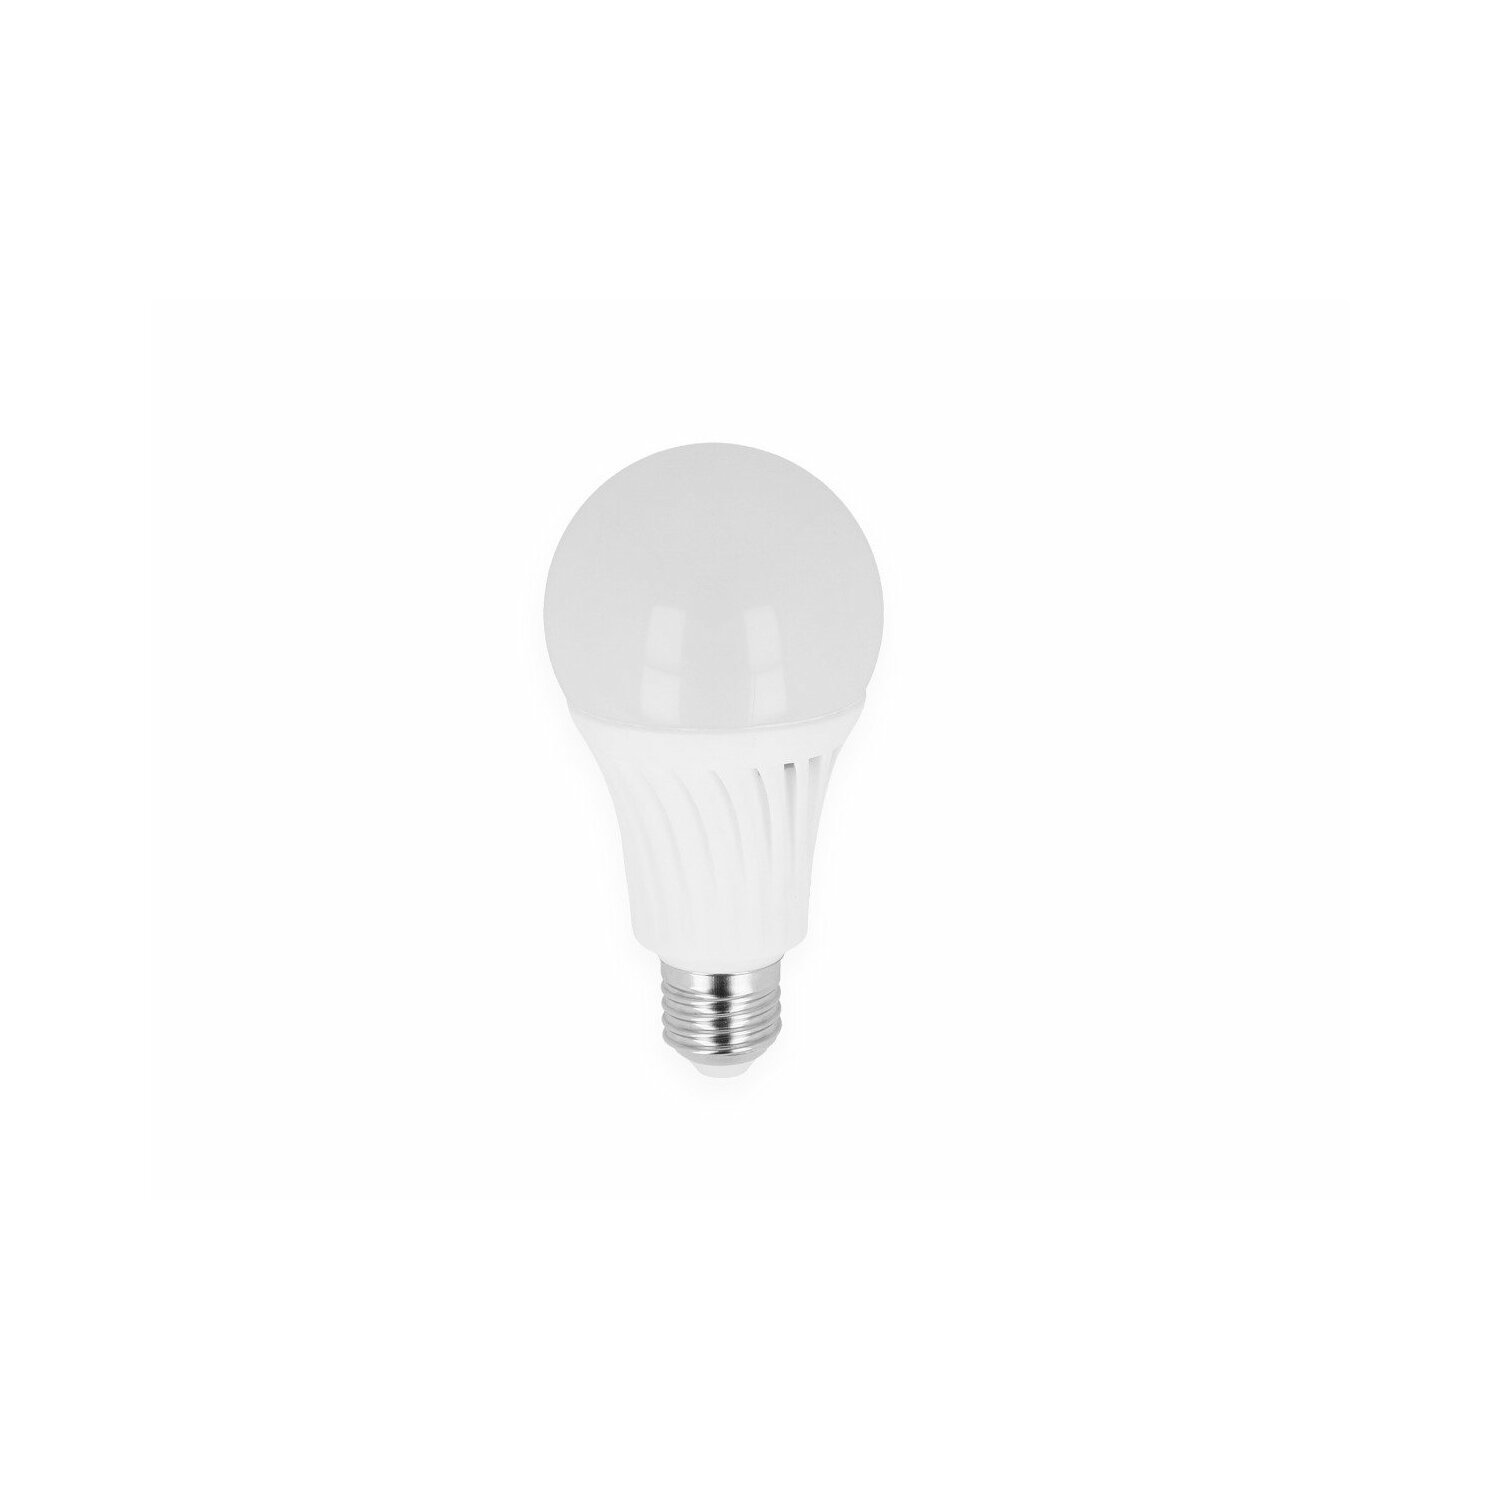 lm E27 LED LED Ceramic Leuchtmittel LINE Warmweiß 18W LED 2x 1800